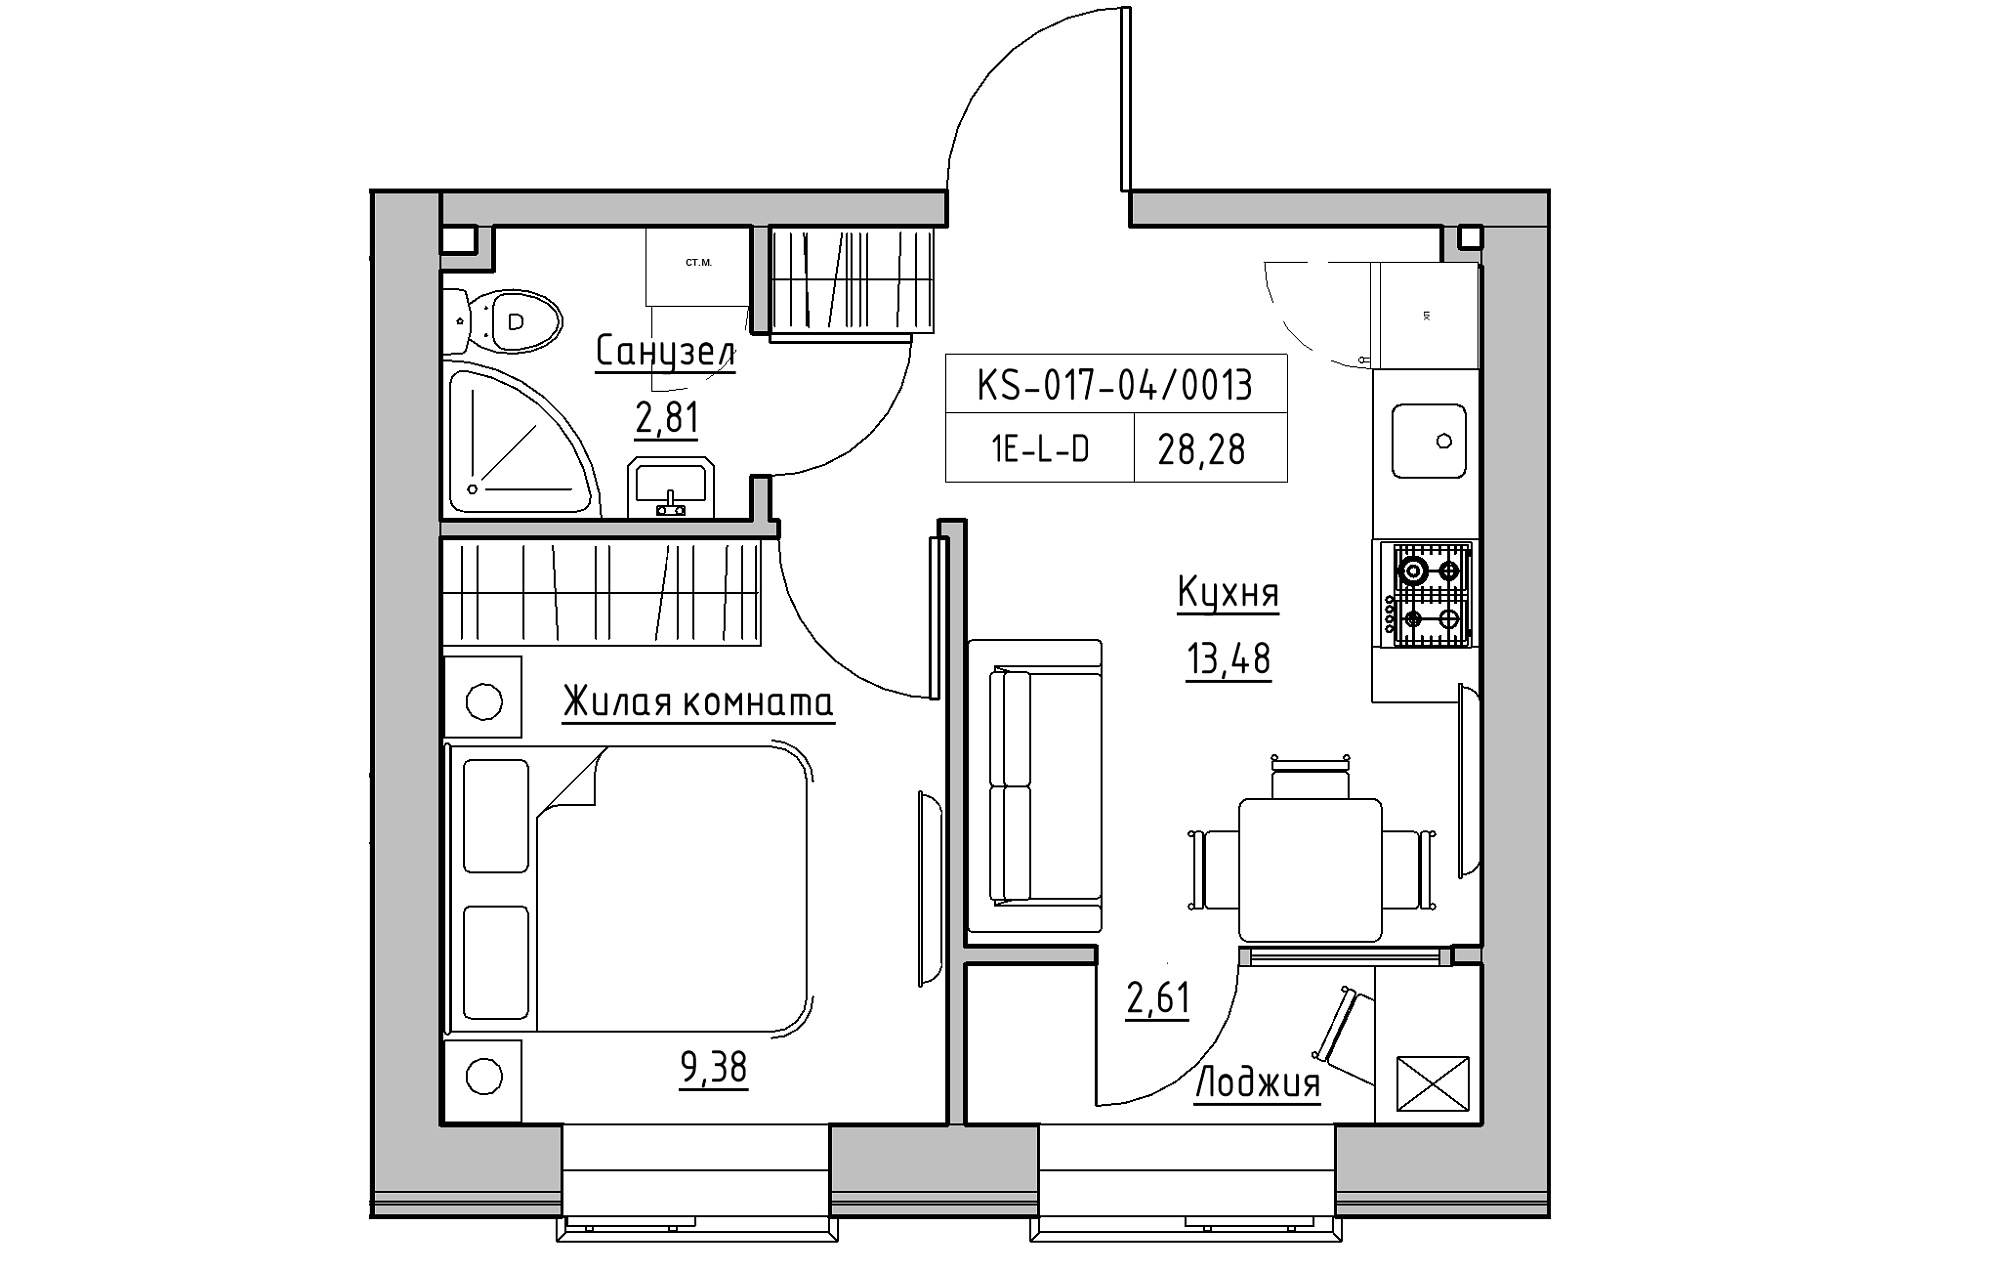 Planning 1-rm flats area 28.28m2, KS-017-04/0013.